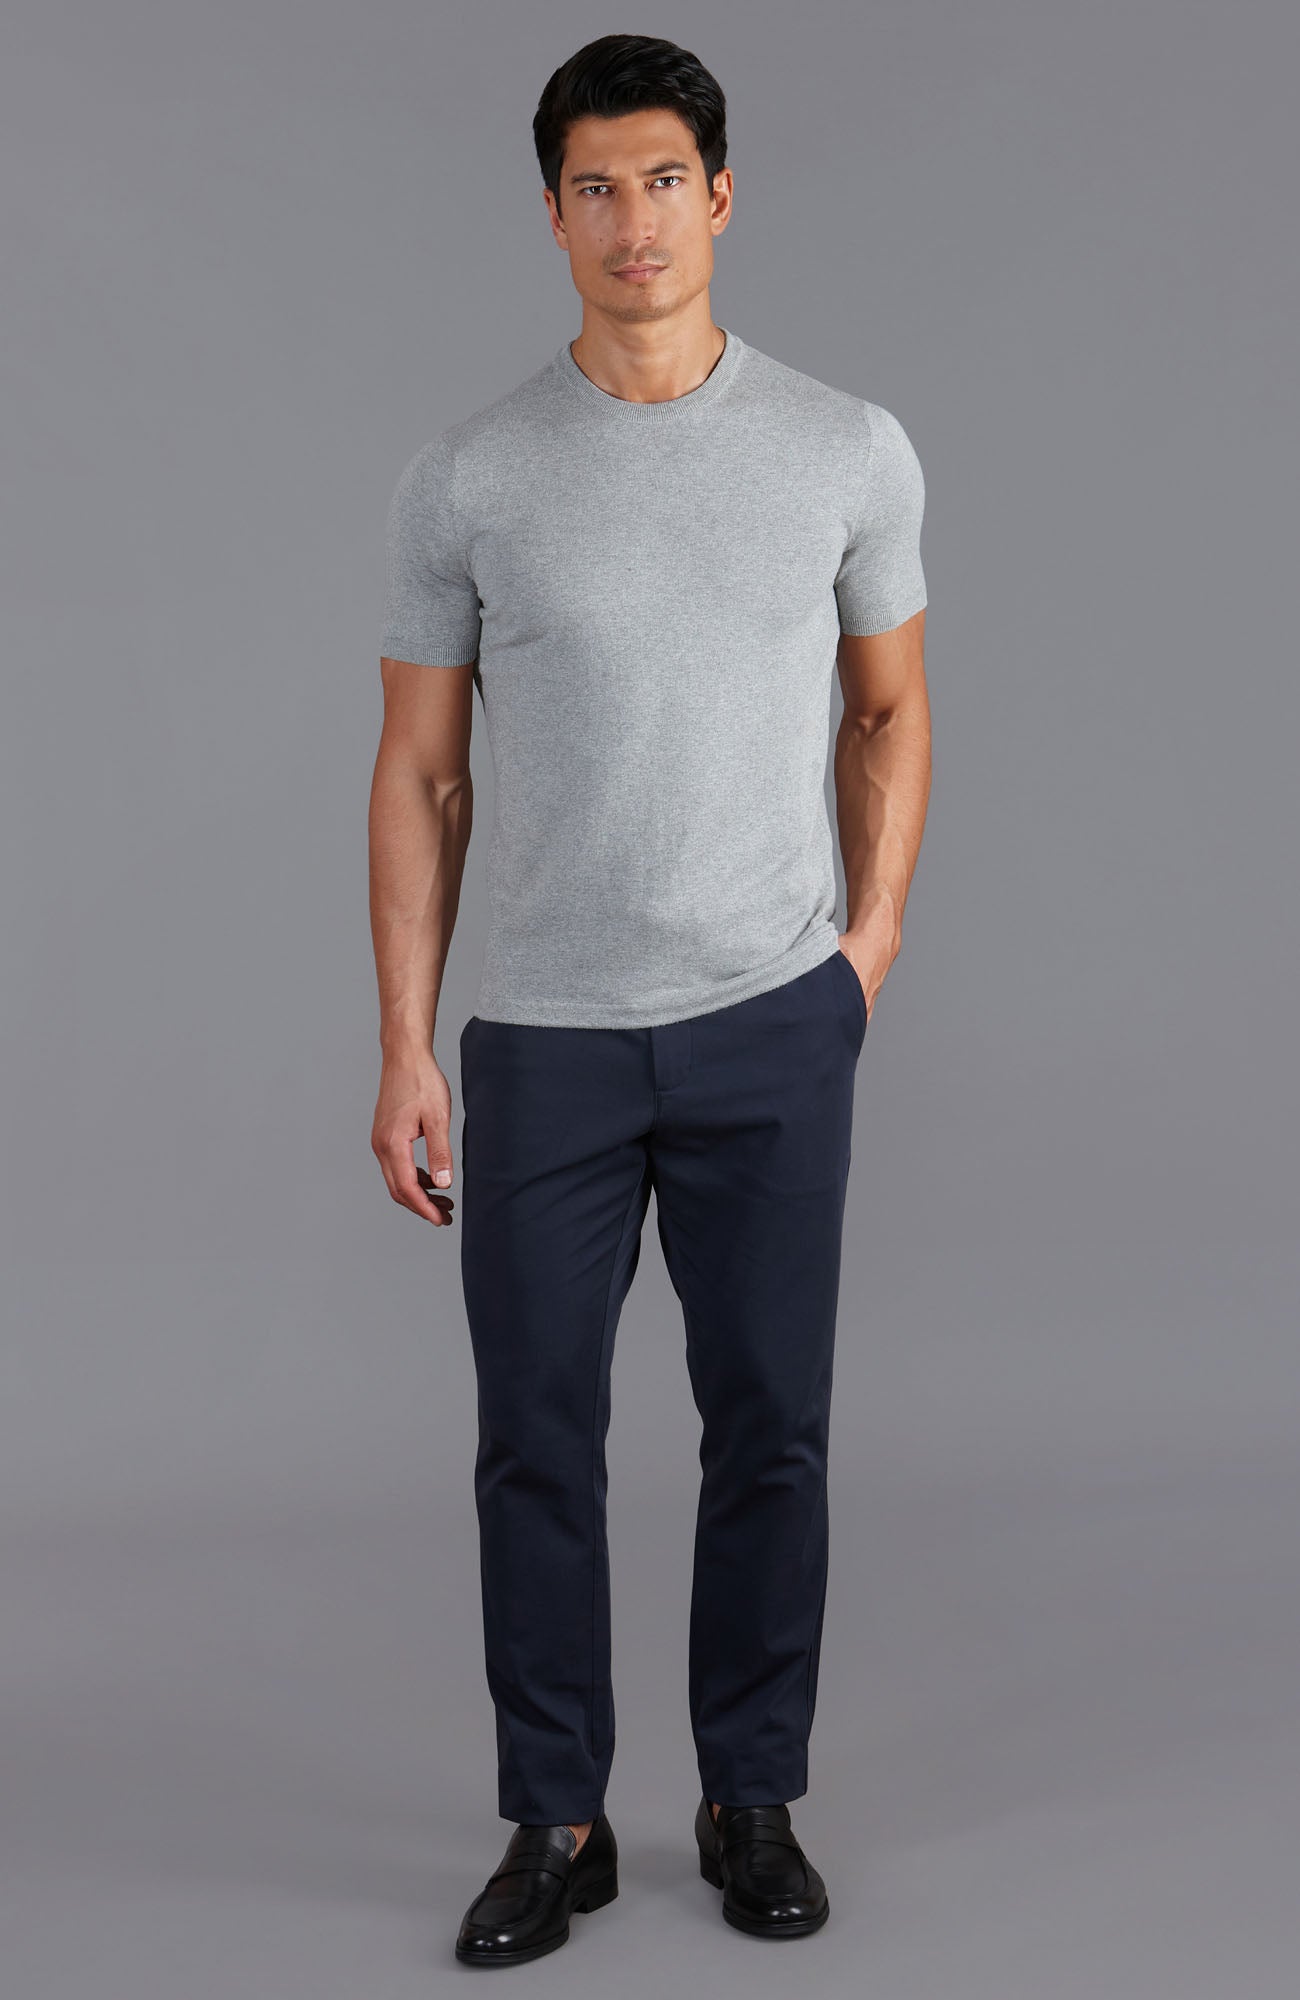 grey mens knitted t shirt